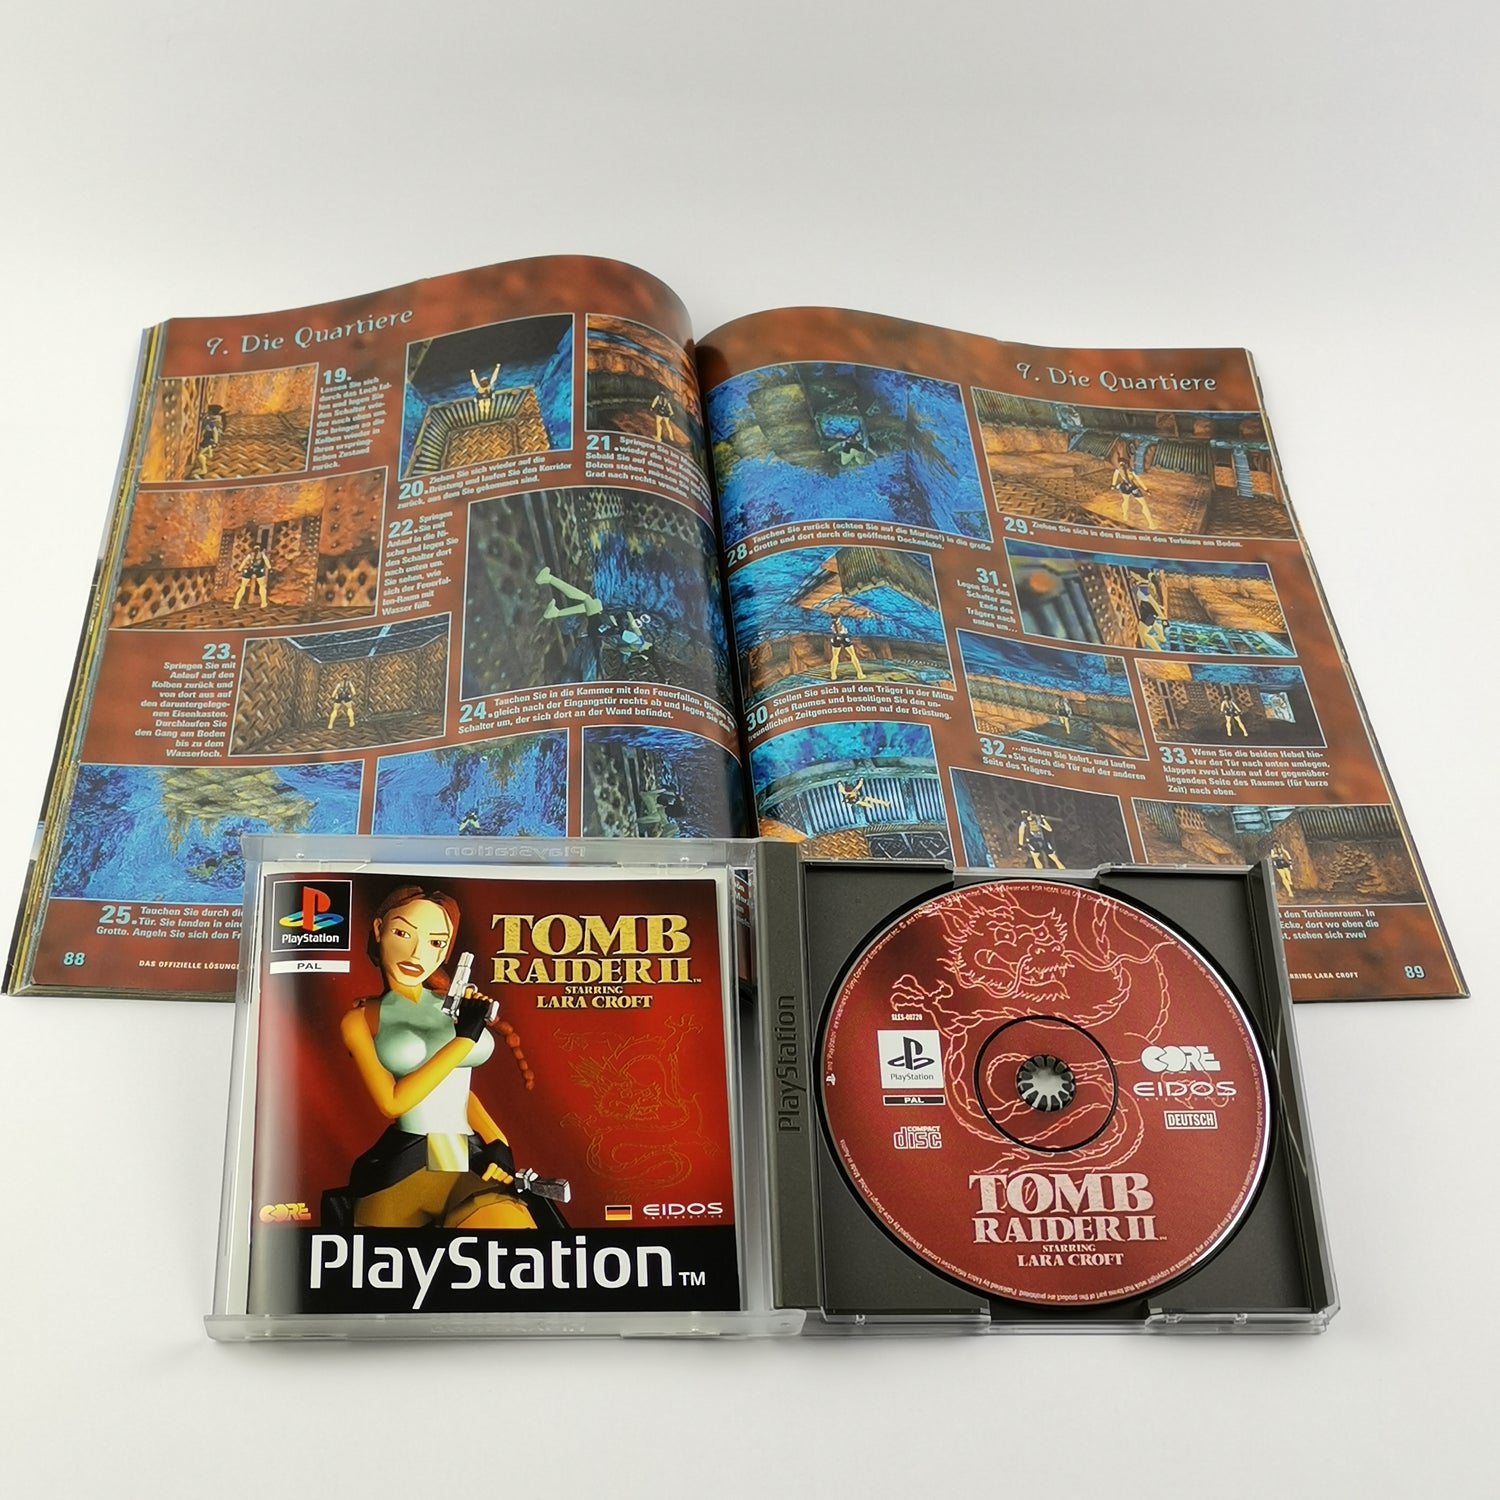 Sony Playstation 1 Spiel : Tomb Raider II + Lösungsbuch - OVP PS1 PSX